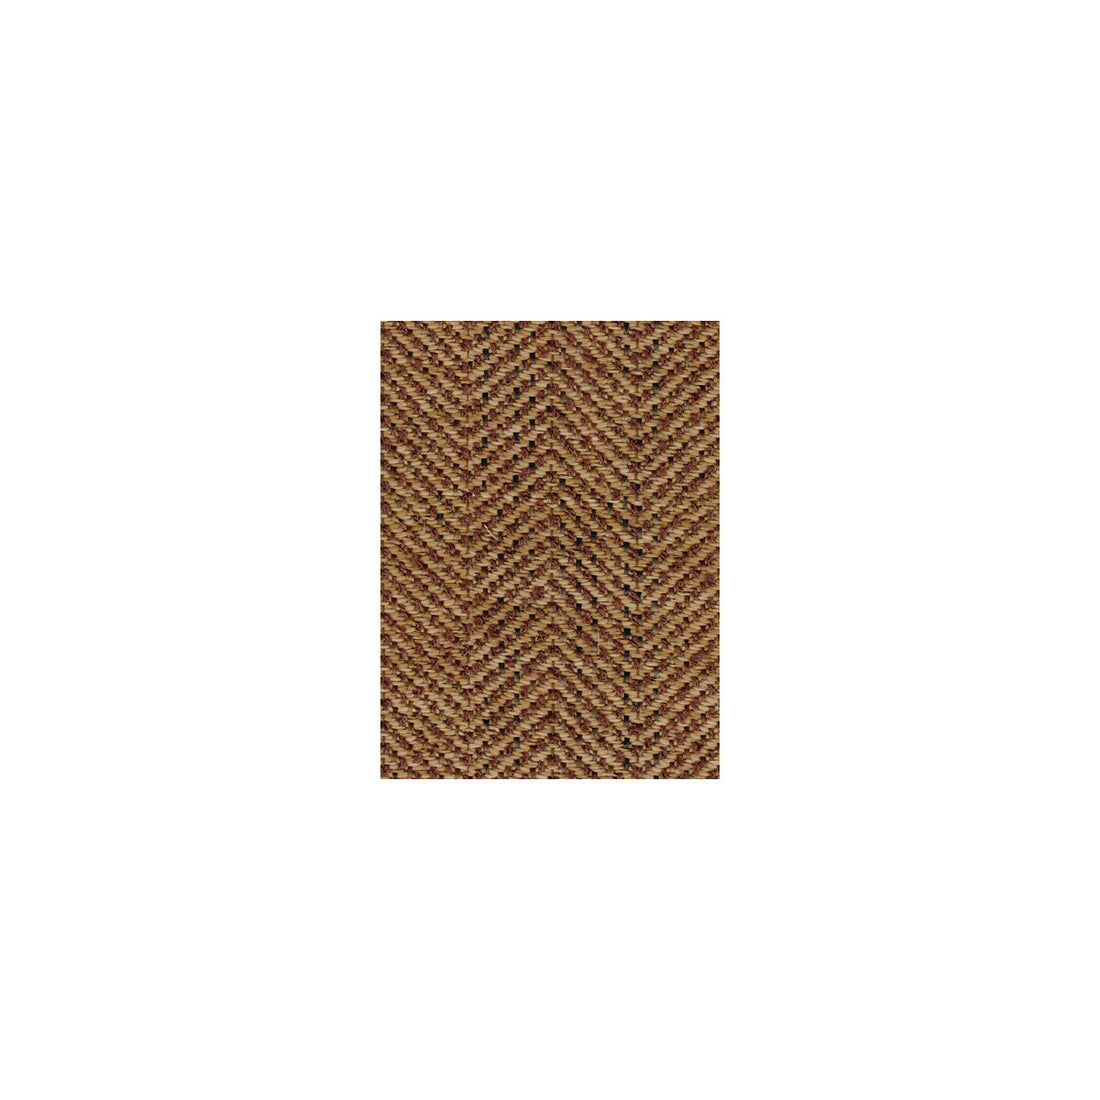 Kravet Smart fabric in 30666-424 color - pattern 30666.424.0 - by Kravet Smart